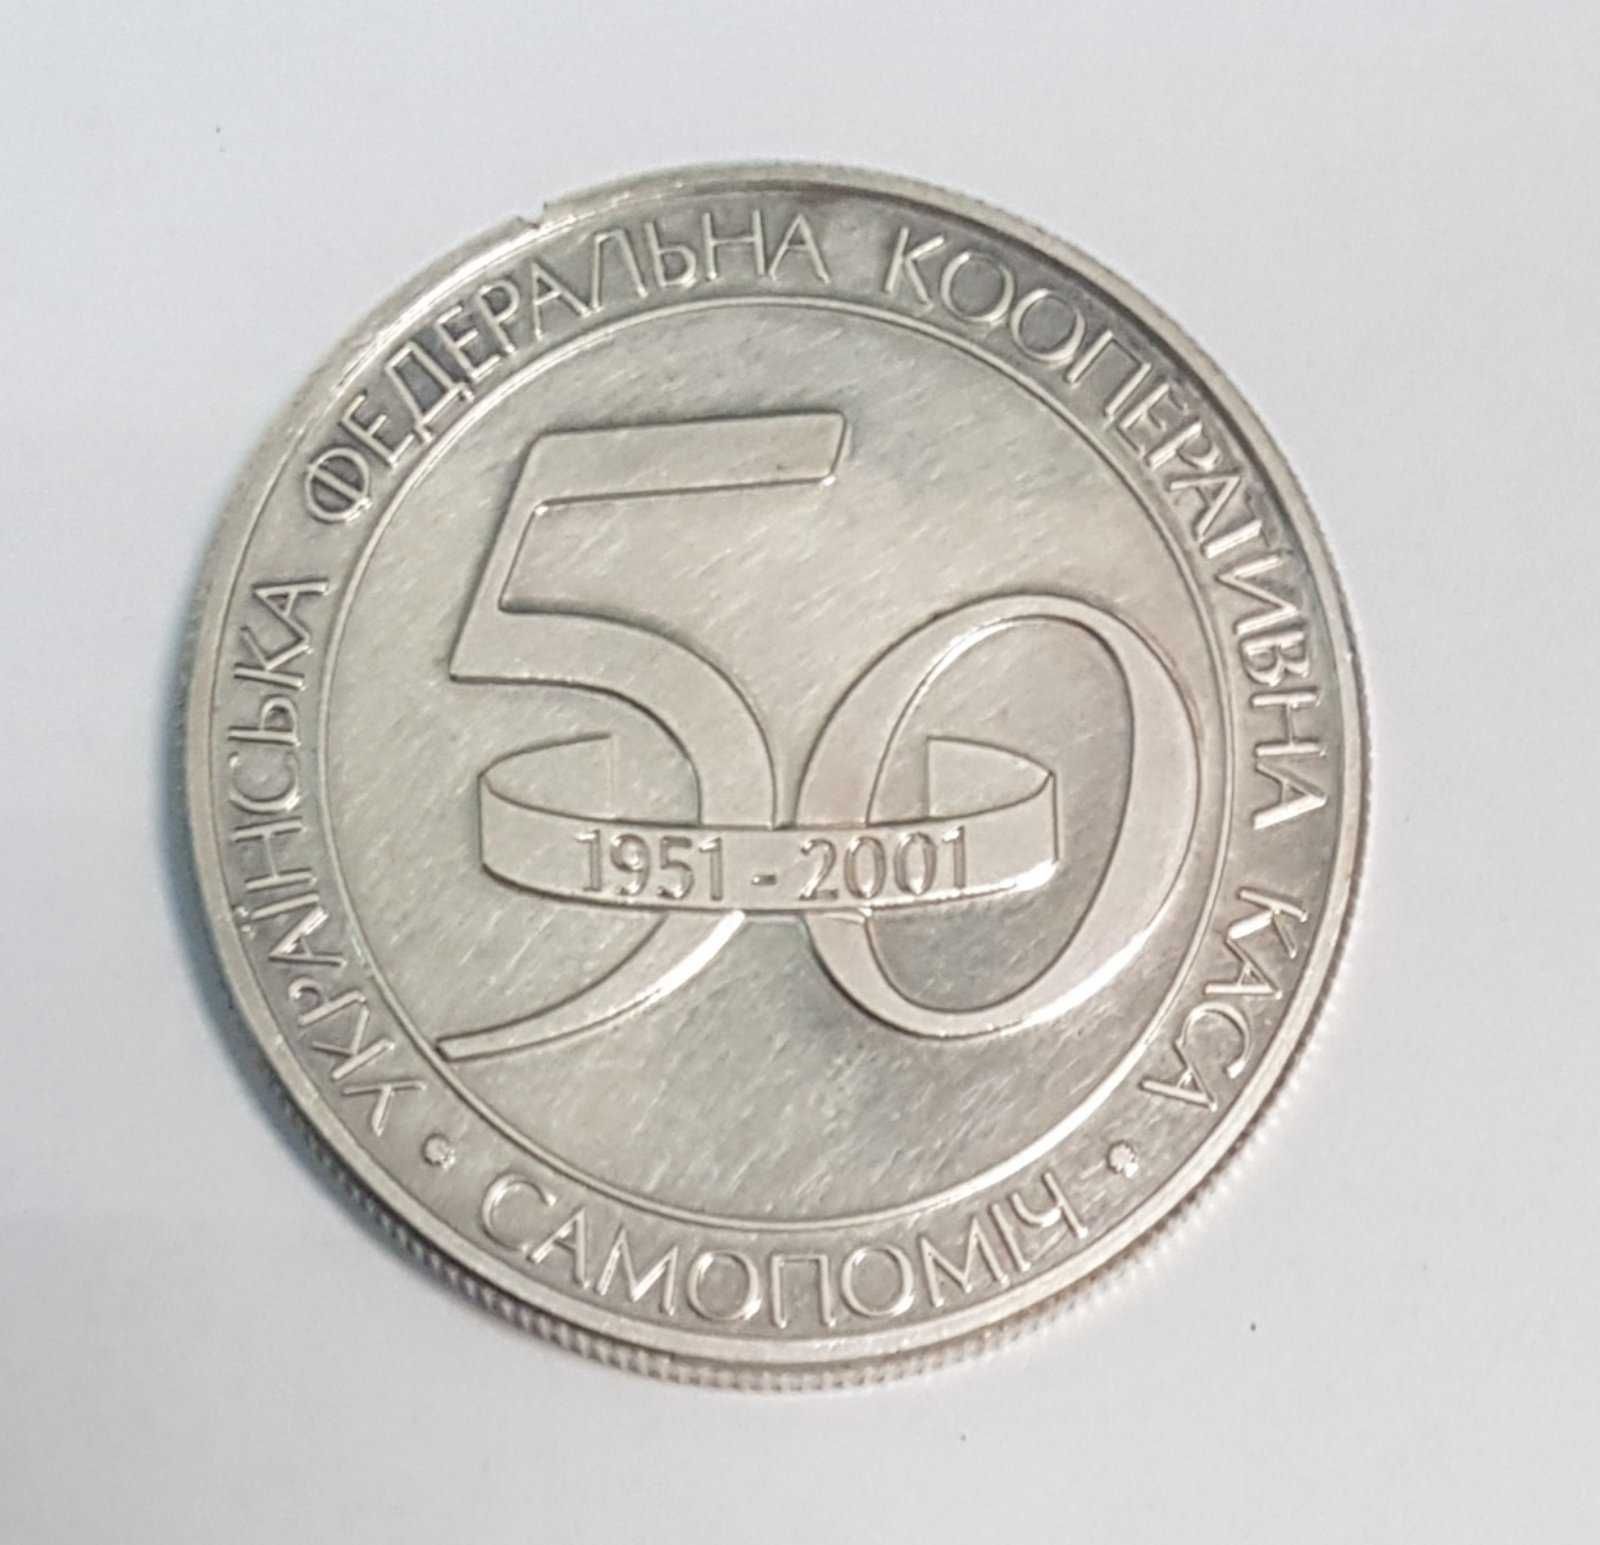 Медаль Українська Федеральна Кооперативна Каса. 50р. 1951-2001 р.